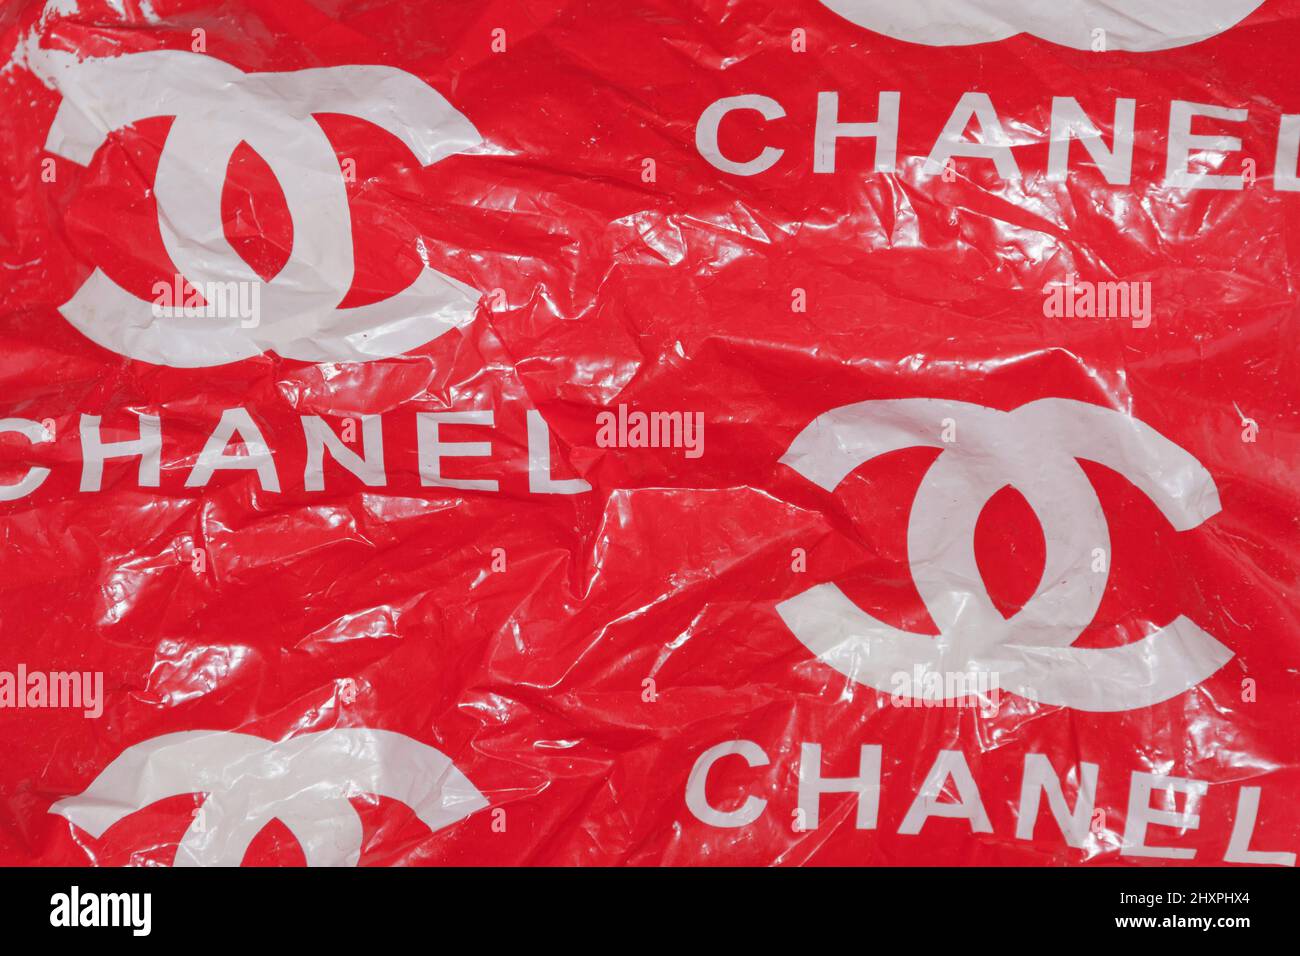 Old plastic bag of Chanel Stock Photo - Alamy